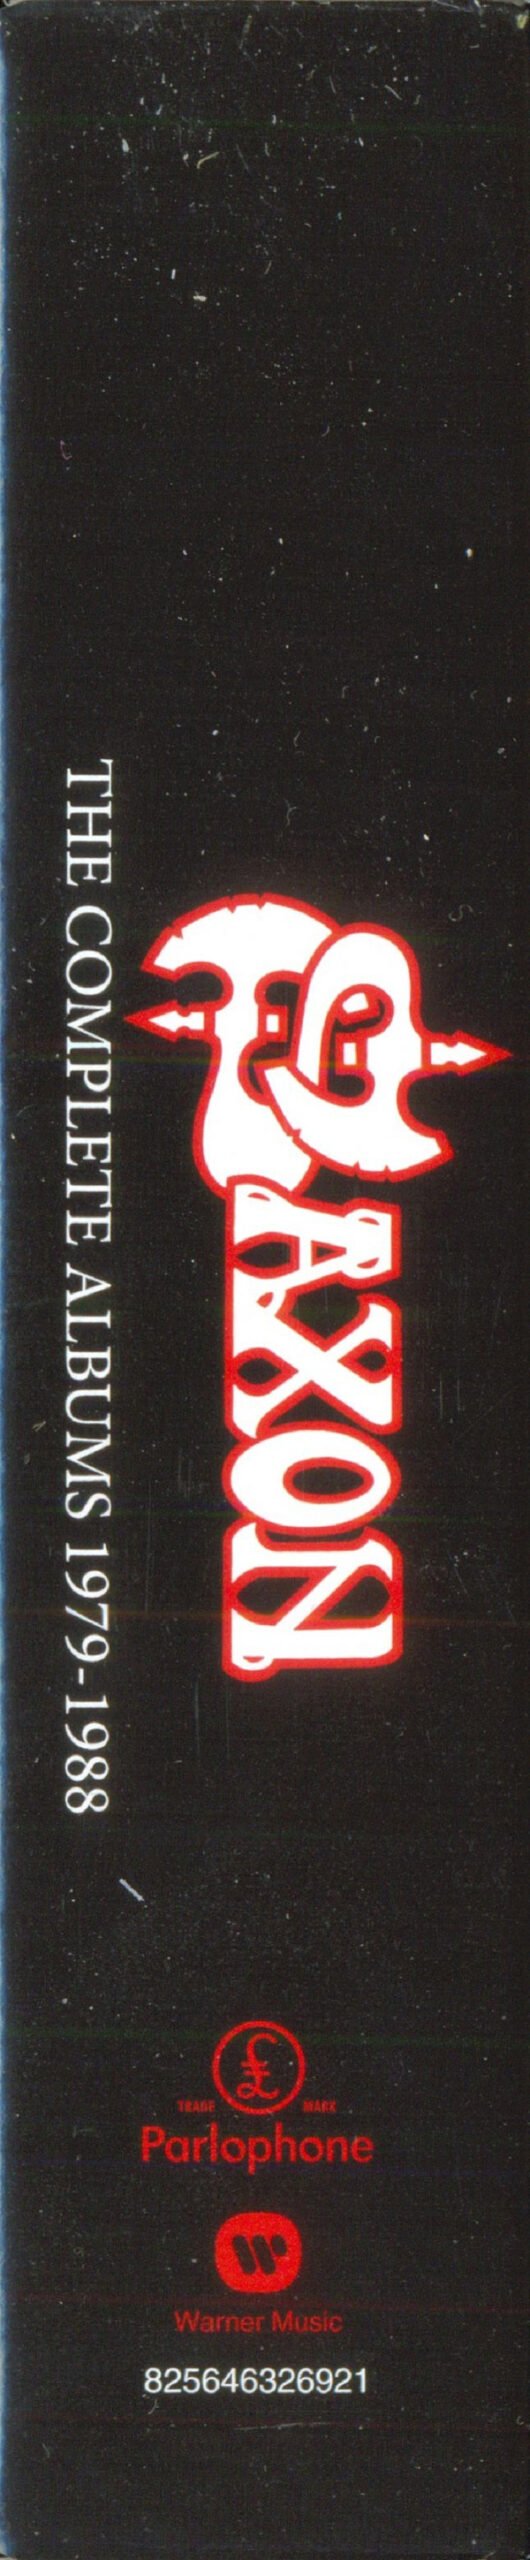 Saxon The Complete Albums 1979-1988-Box, Vinilos, Historia Nuestra